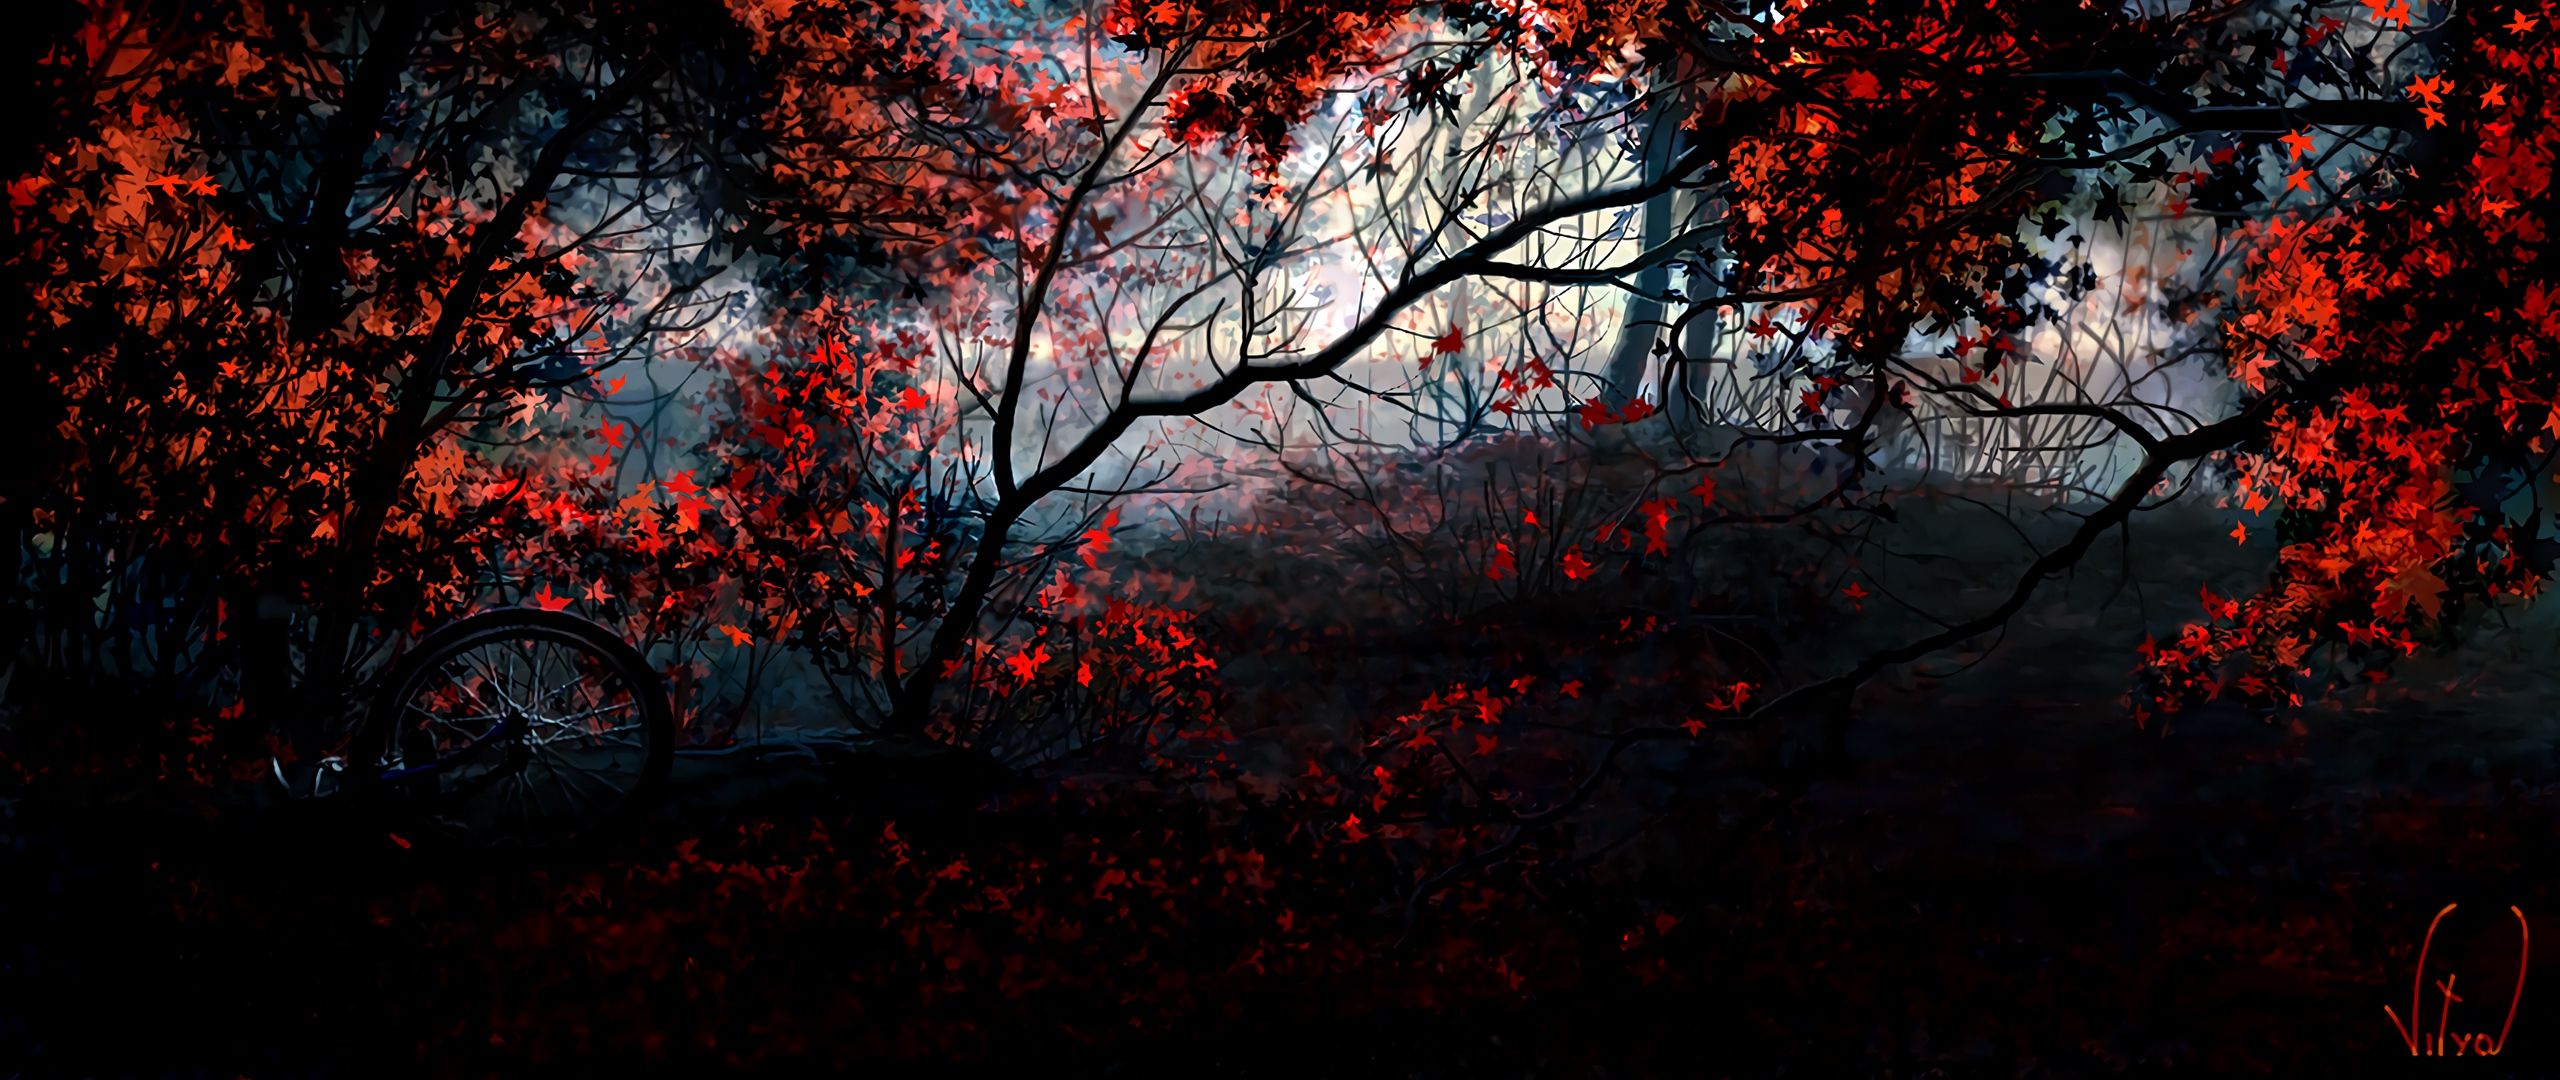 Download wallpaper 2560x1080 trees, autumn, forest, bike, art dual